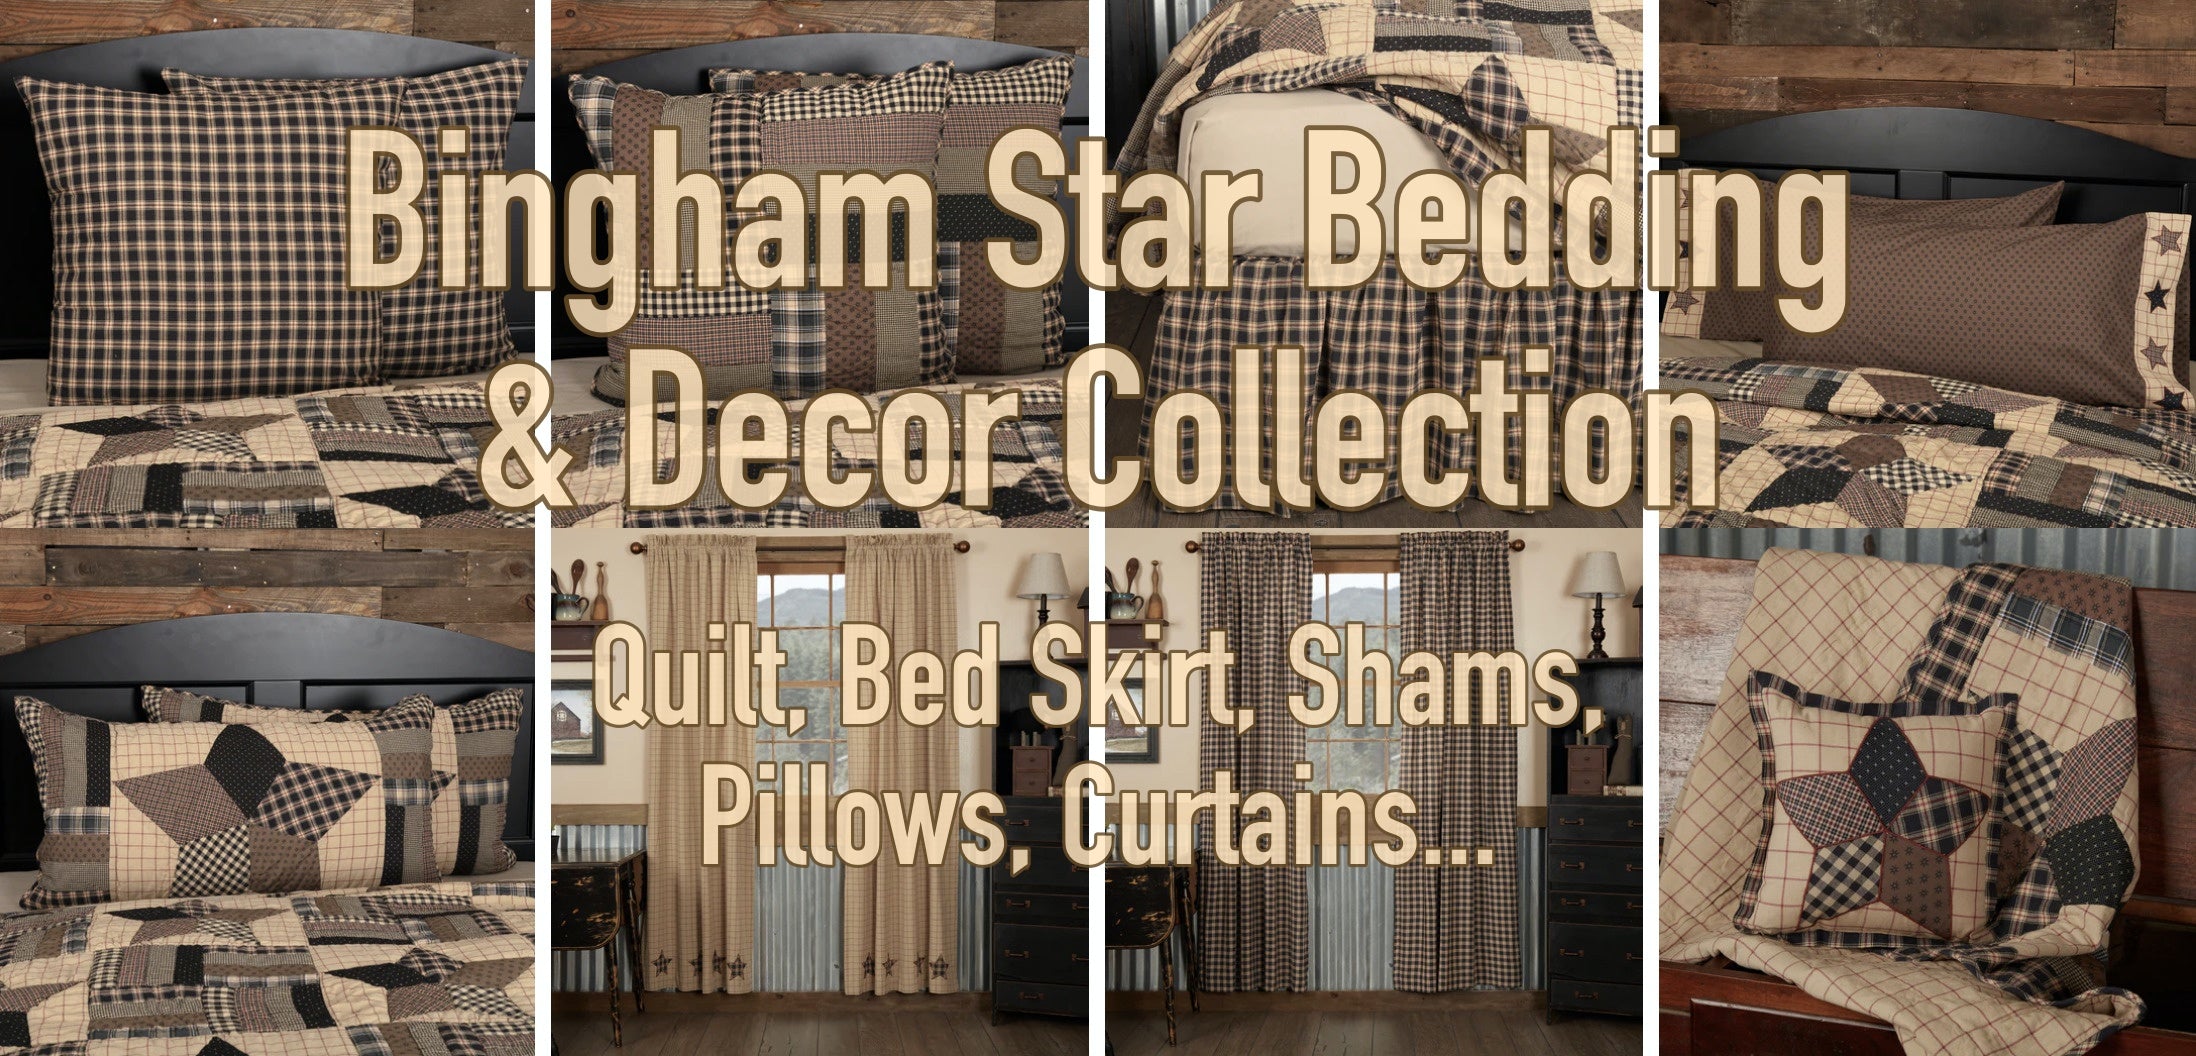 Bingham Star Bedding & Decor Collection